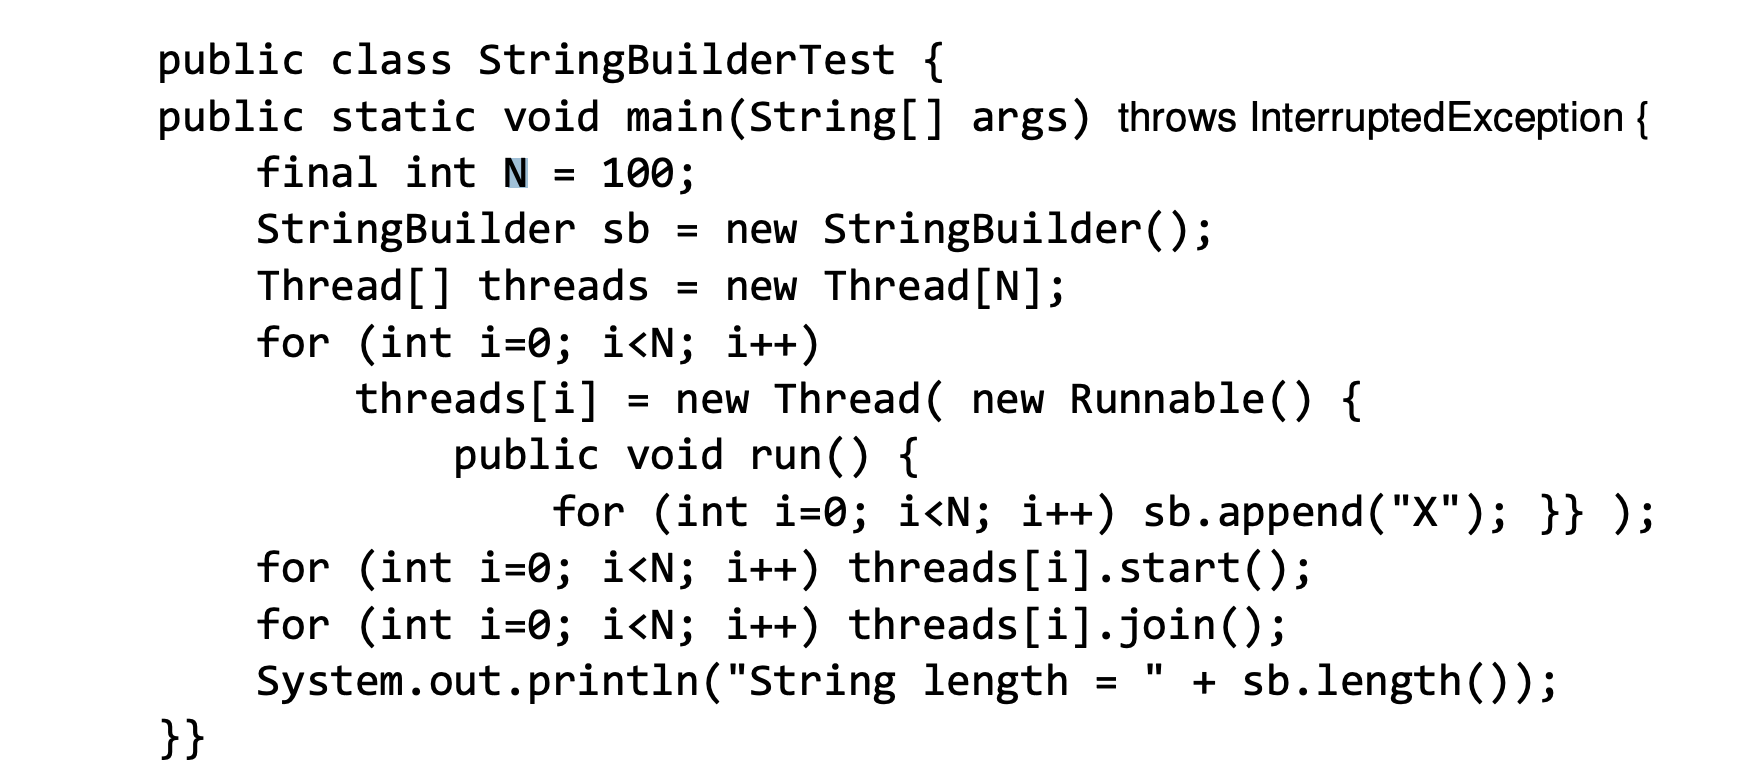 public class StringBuilderTest {
public static void main(String[] args) throws InterruptedException
100
final int N
StringBuilder sb
Thread[] threads =
for (int i-0; i<N; i++)
threads[i]
new StringBuilder();
new Thread [N];
= new Thread new Runnable() {
public void run() {
for (int i-0; i<N; i++) sb.append ( "X"); }} );
for (int i-0; i<N; i++) threads [ i] . start();
for (int i-0; i<N; i++) threads [i].join();
System.out.println("String length
}}
sb.length());
=
